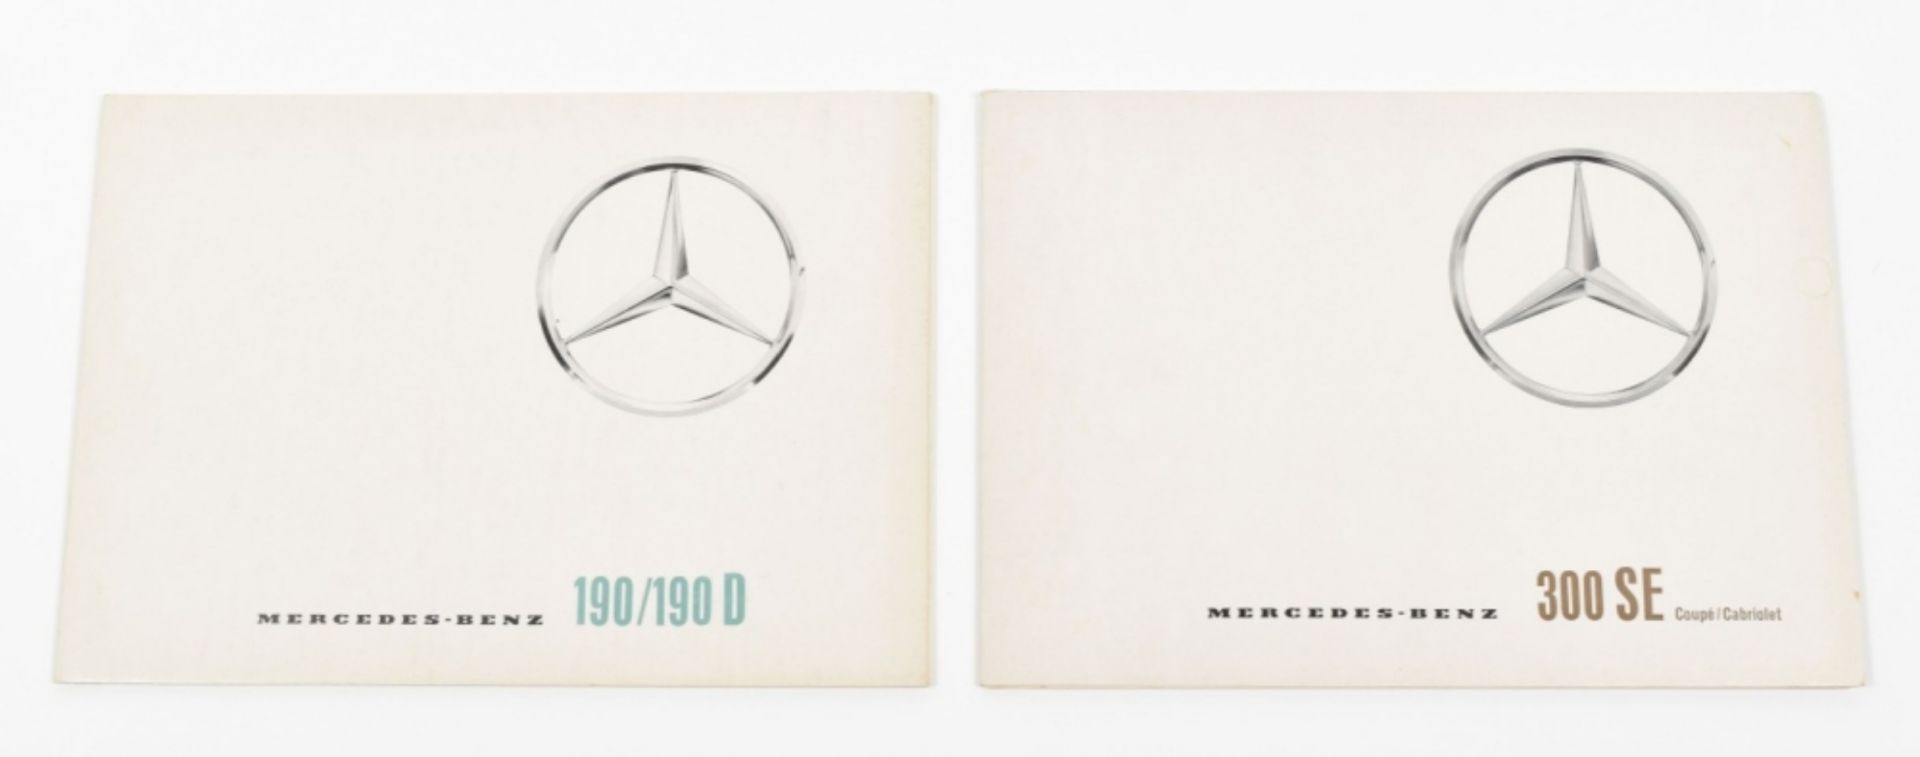 Mercedes-Benz - Image 6 of 10